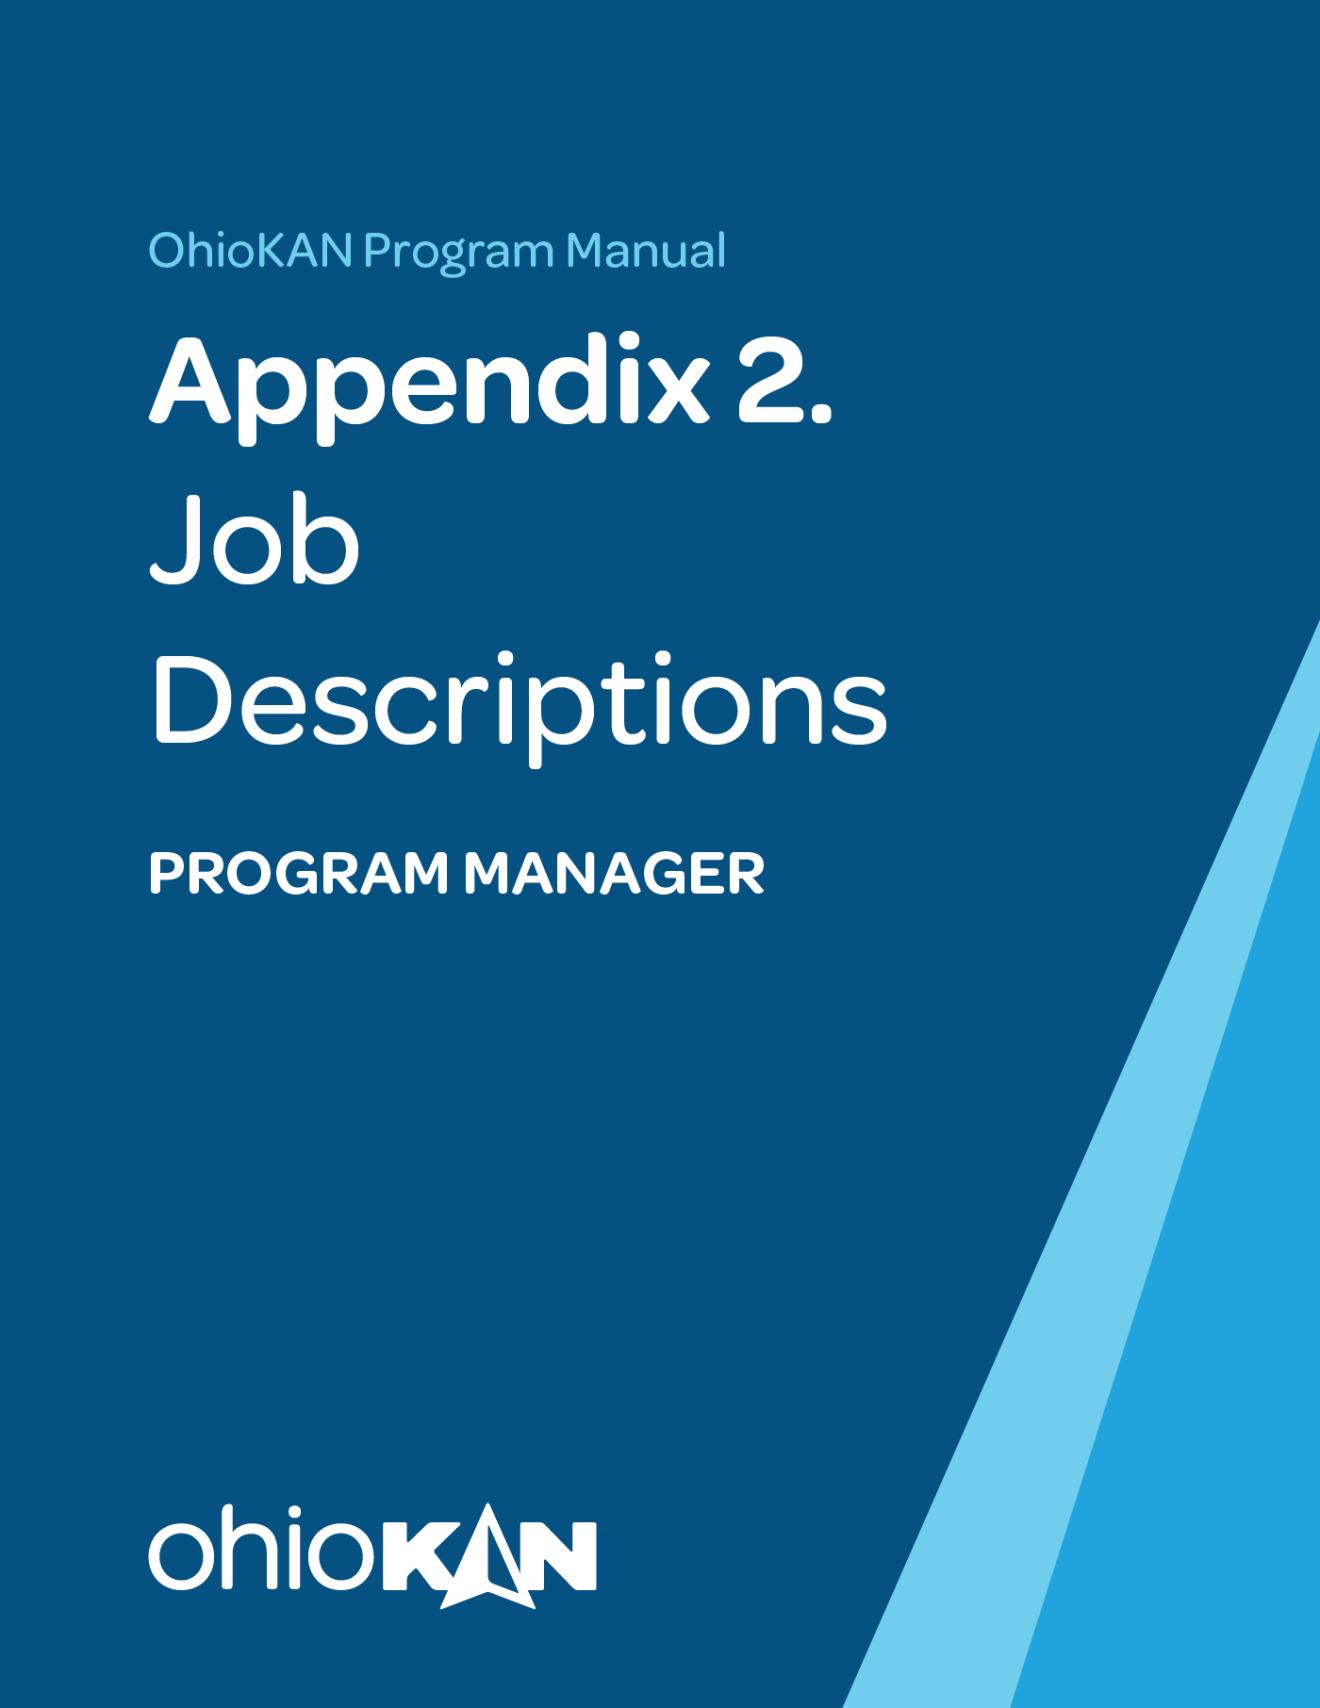 Appendix 2 Program Manager